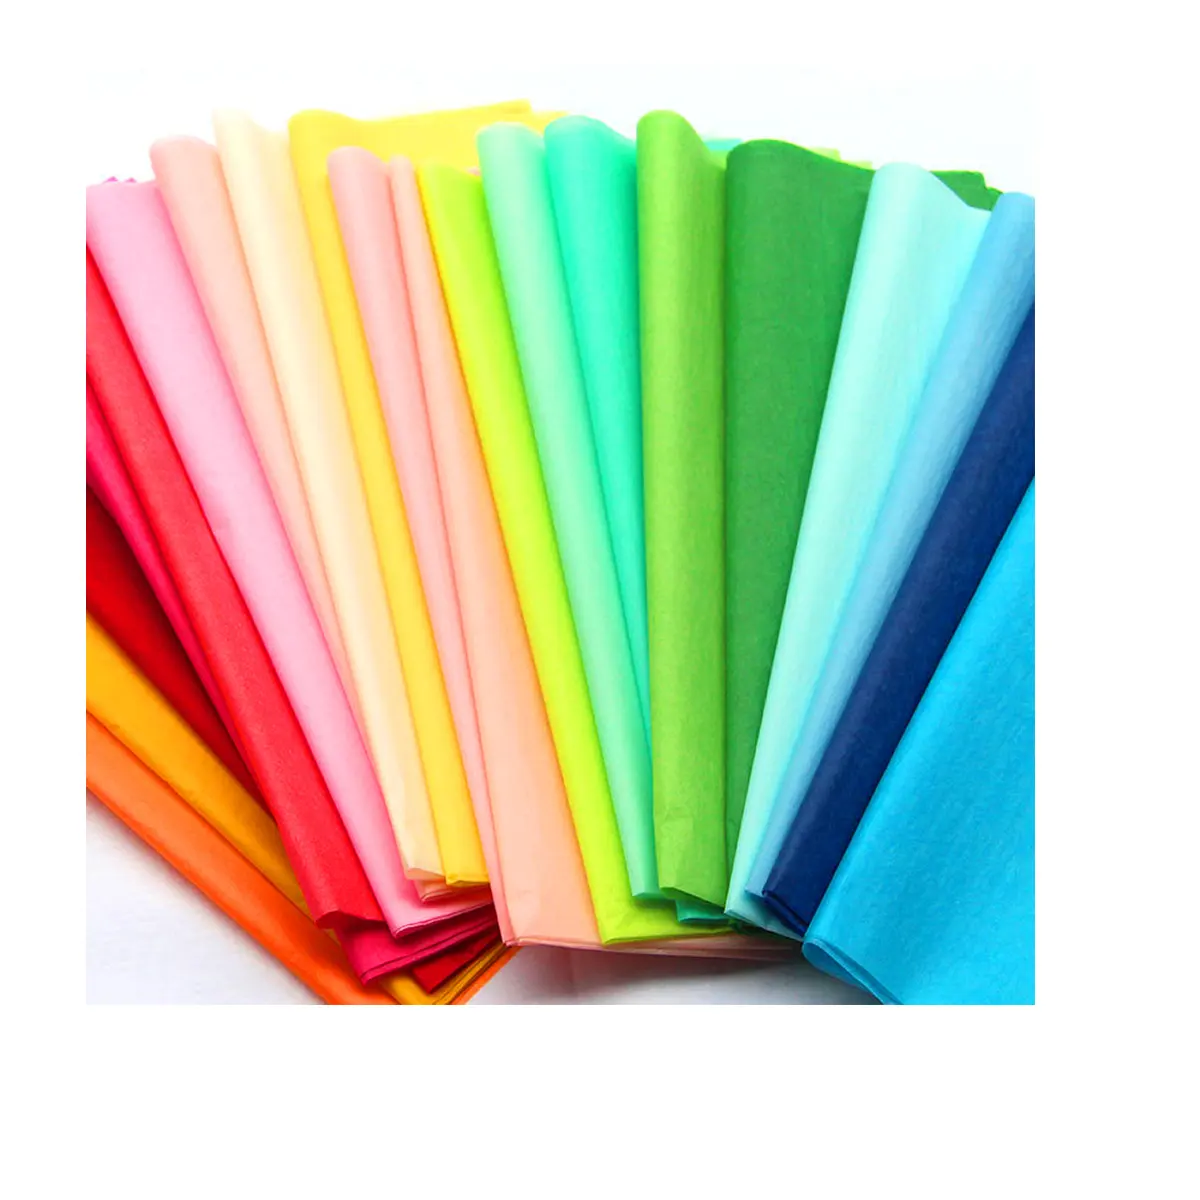 Farbenfrohes Wickelpapier Luxus-Seidenpapier Wickelpapier hochwertiges 17 gsm Wickelpapier